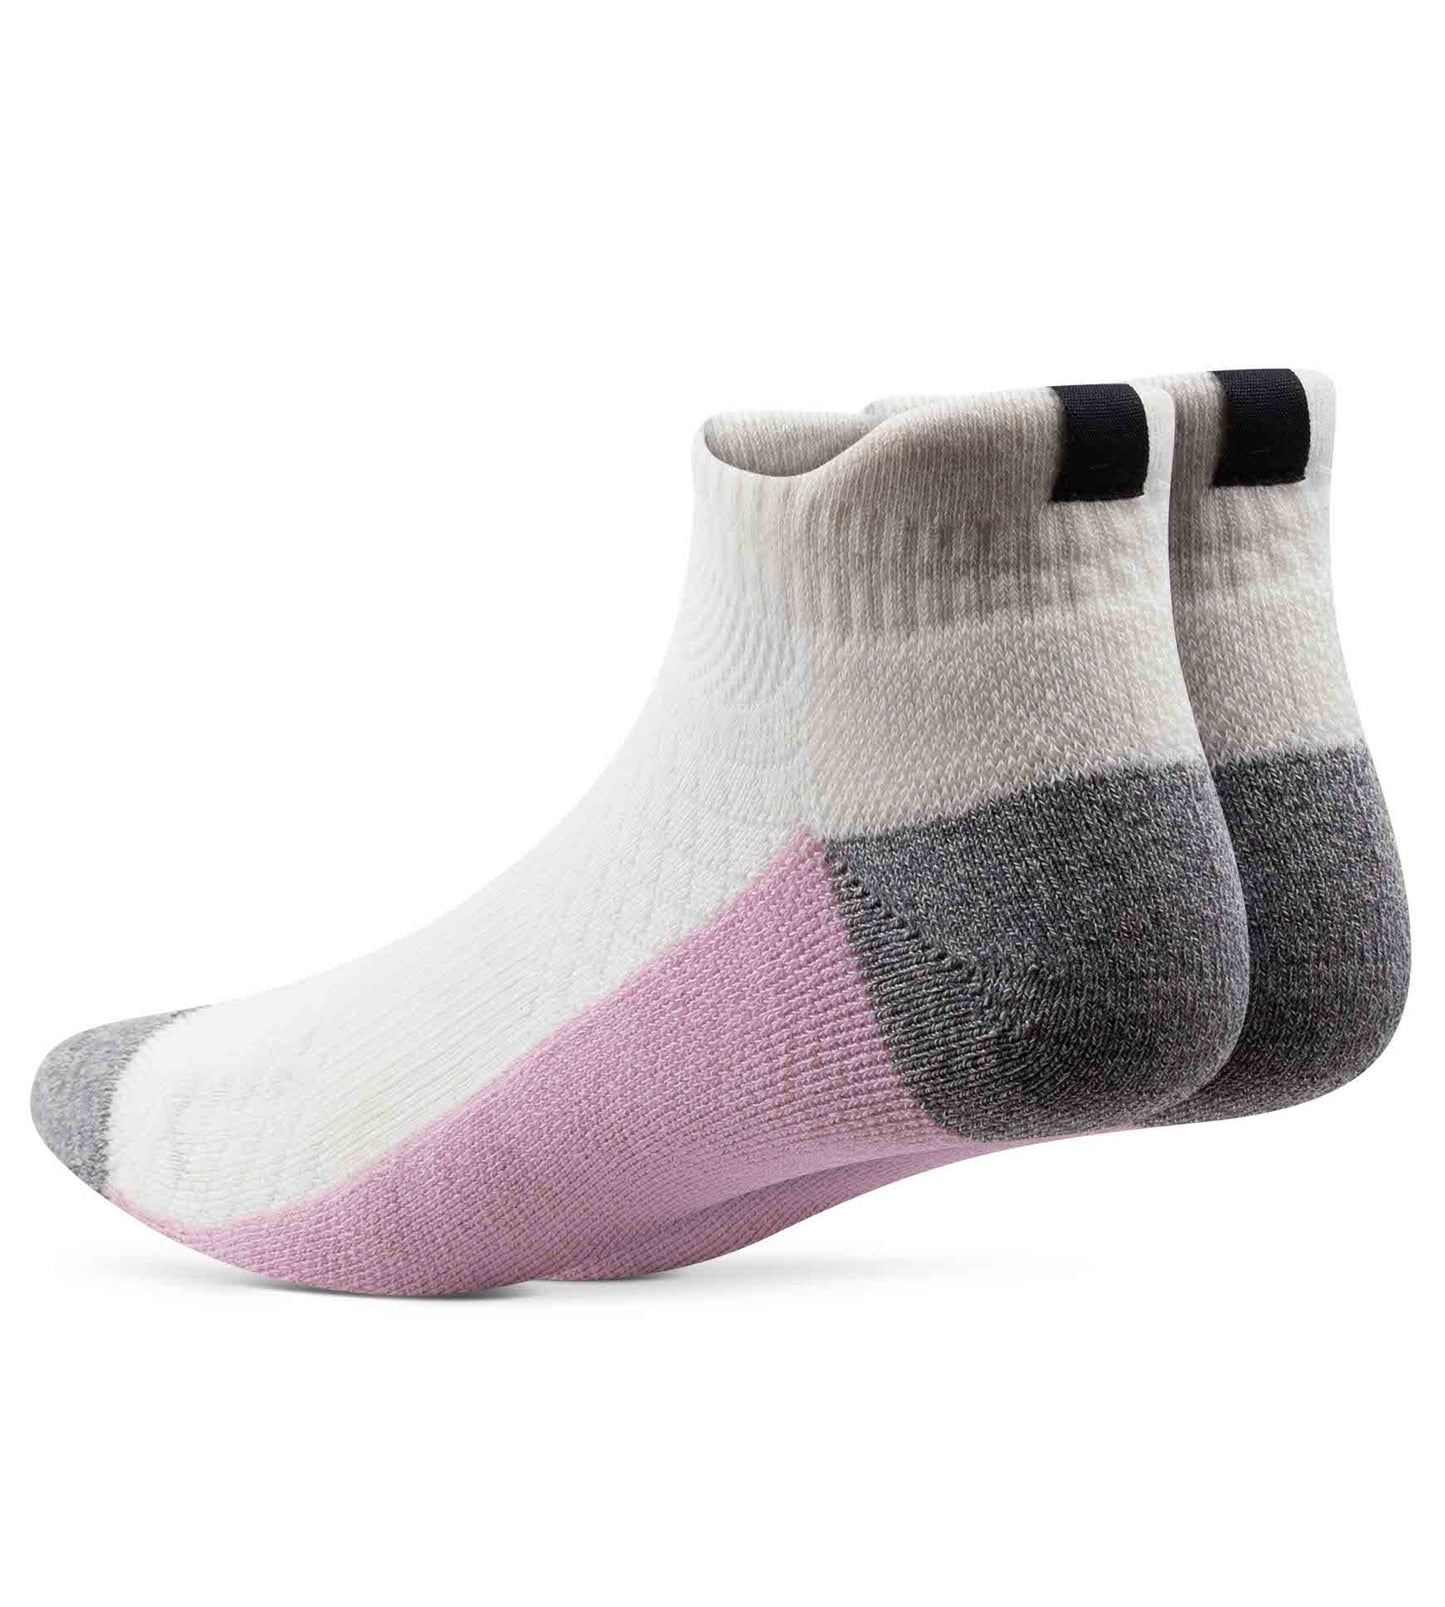 Hustle Cushion Low-Cut Socks 3 Pack colors contain: Dim gray, Silver, Dark slate gray, Gains boro, Gray, Light Gray, Dim gray, Black, Dark Gray